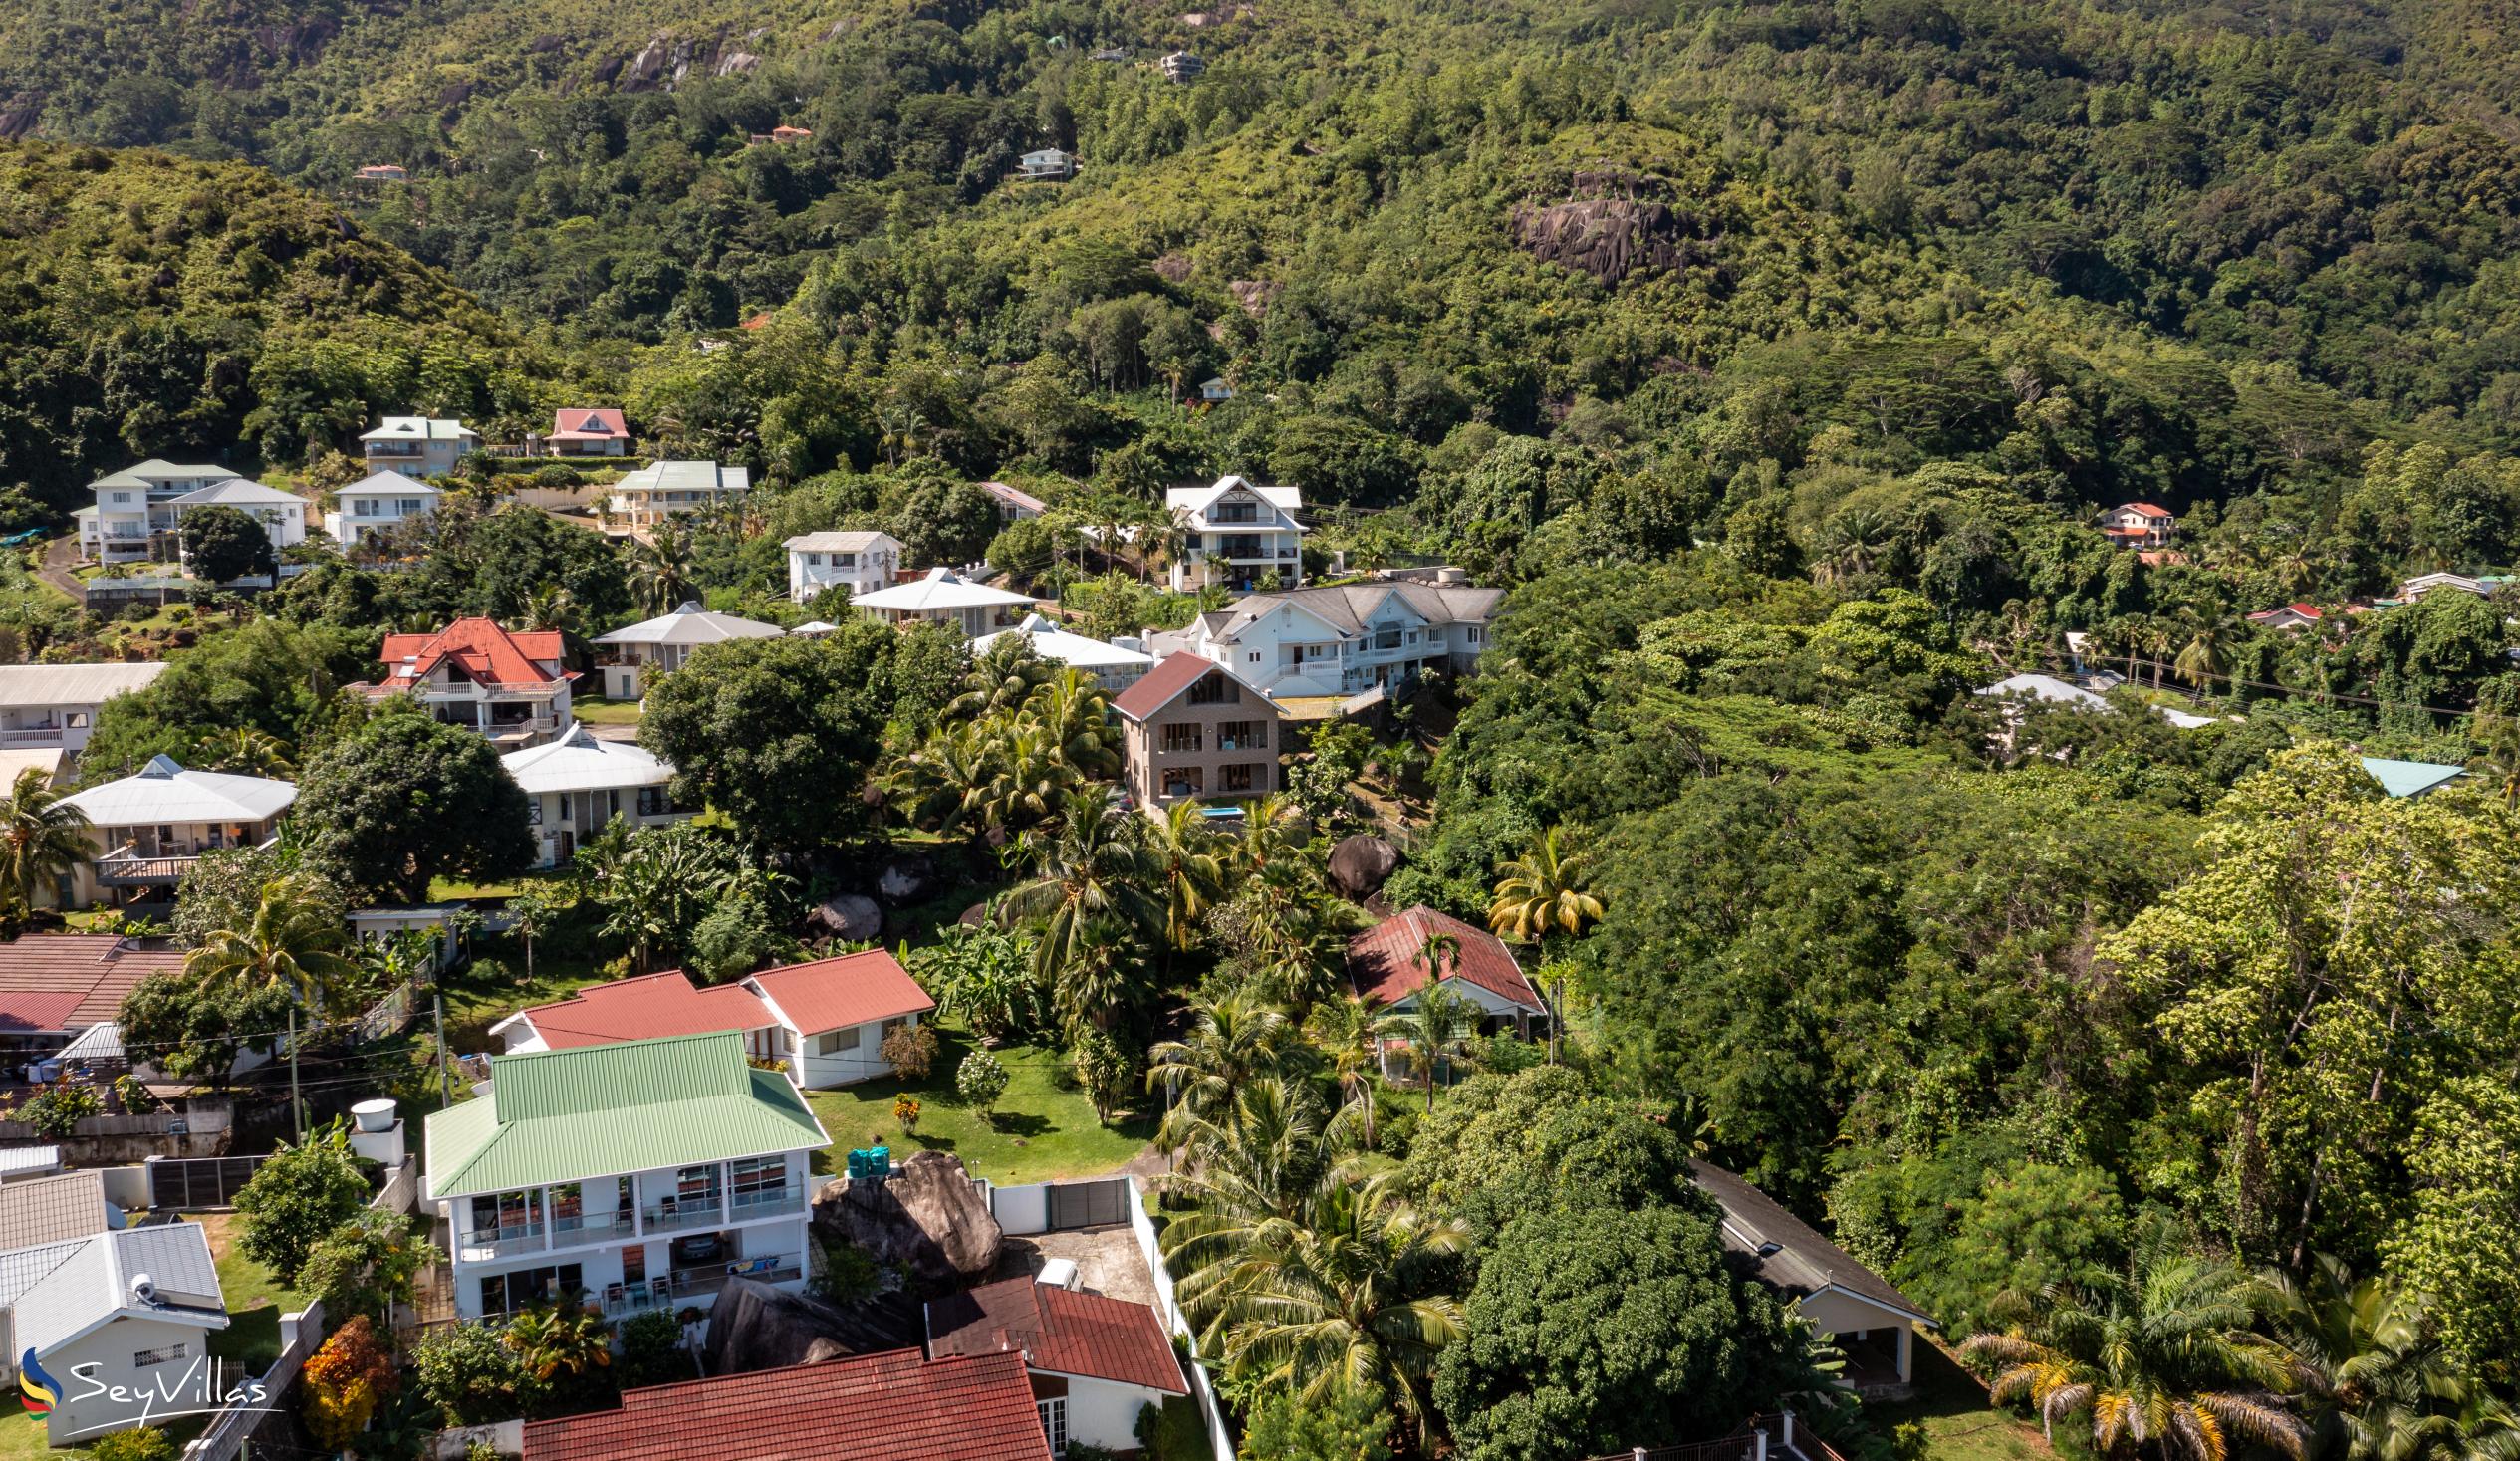 Foto 45: Villa Jasmin - Lage - Mahé (Seychellen)